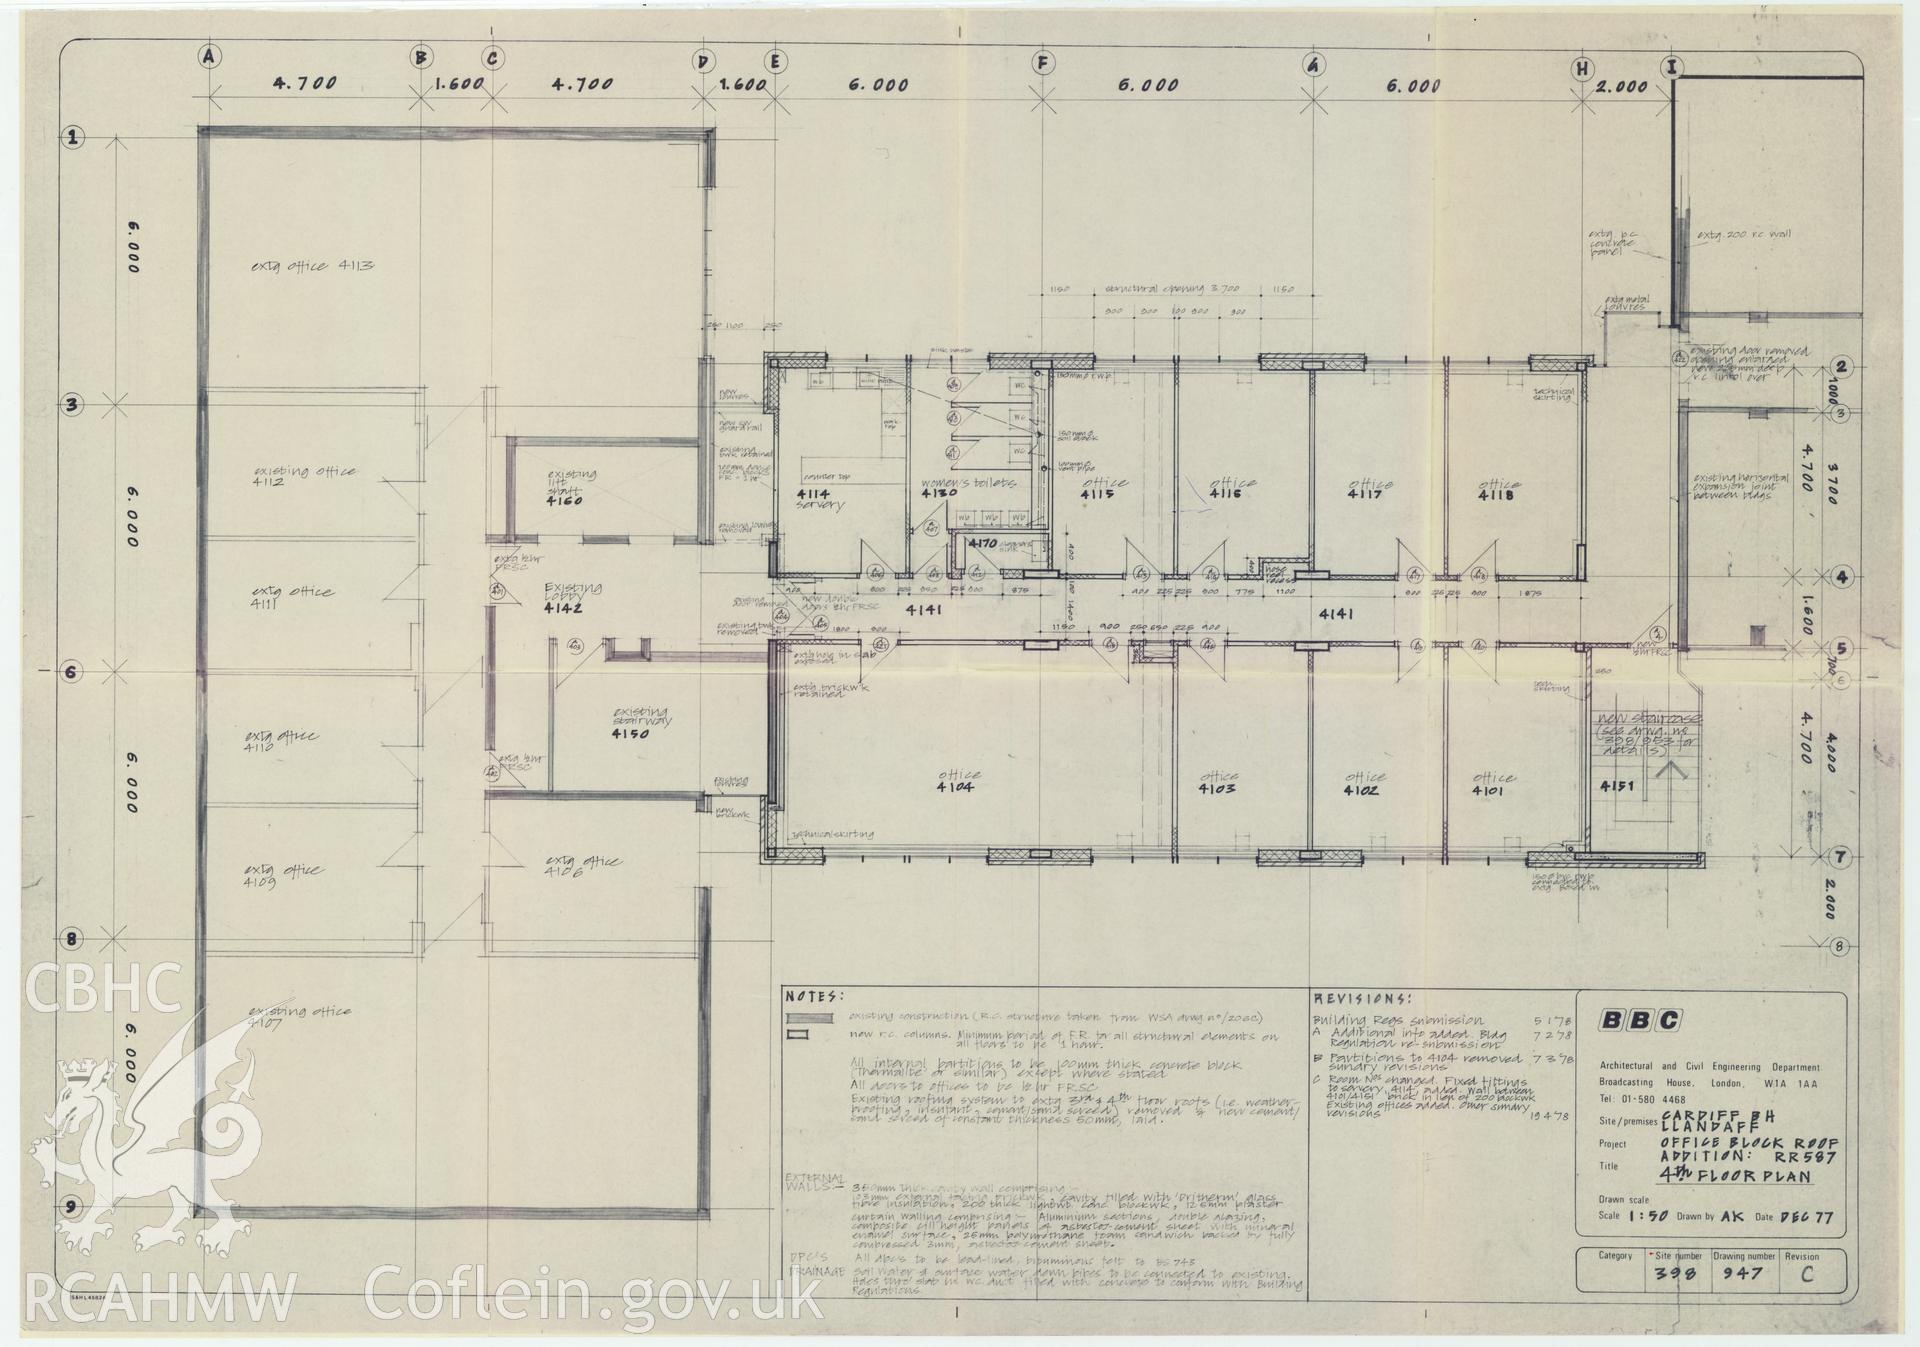 Digitised drawing plan of BBC Llandaff  - office block roof addition: RR587, fourth floor plan. Drawing no. 947 RevC. December 1977.